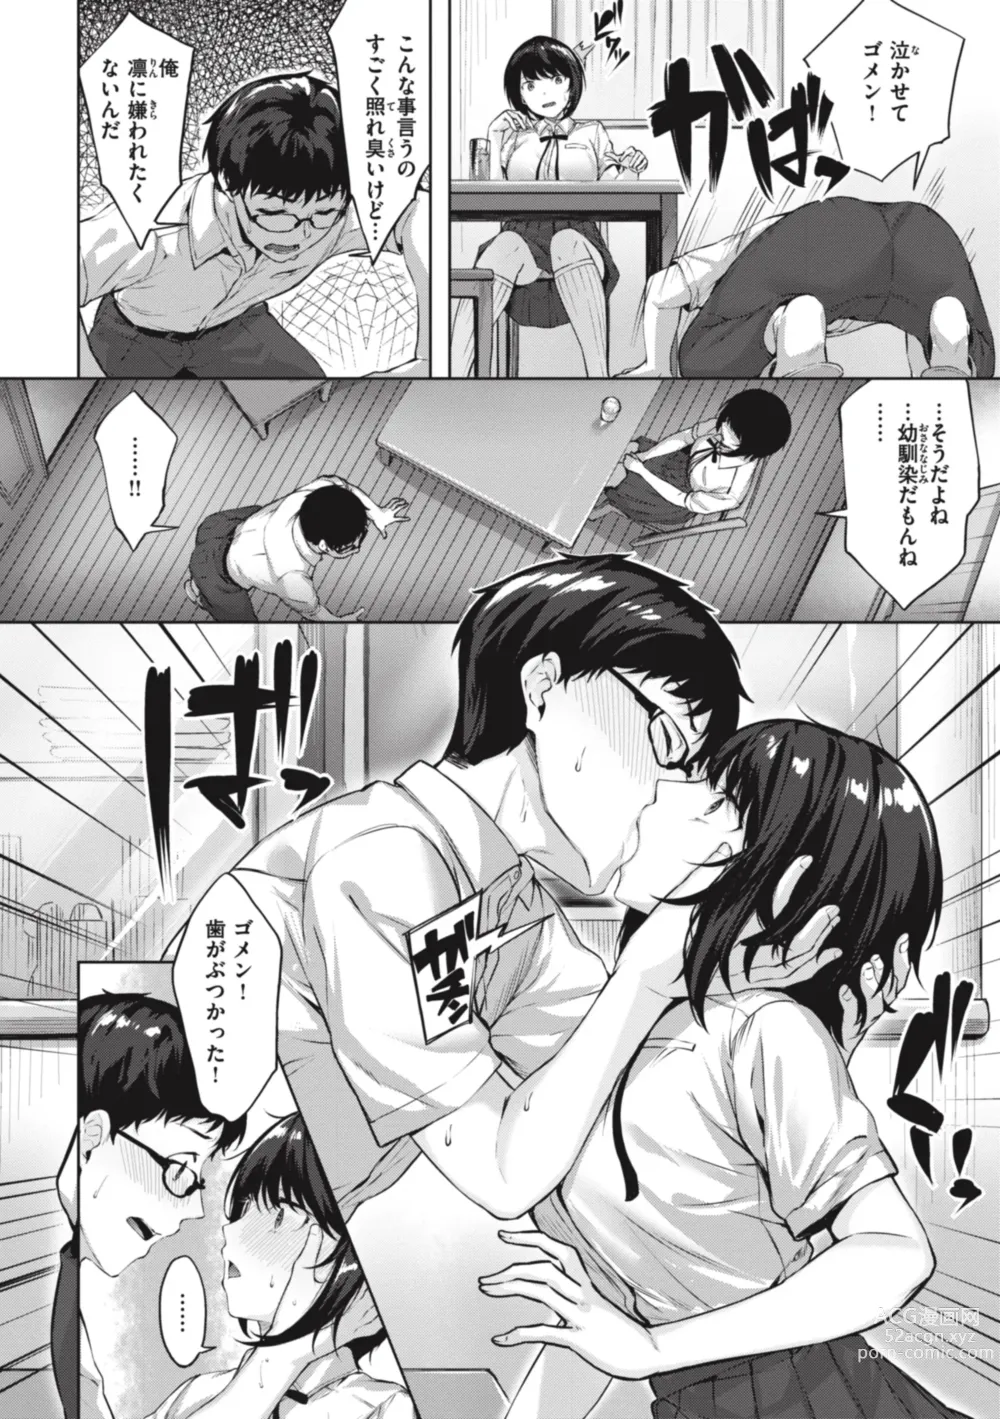 Page 14 of manga Midarete Tenshi - Nasty Angel